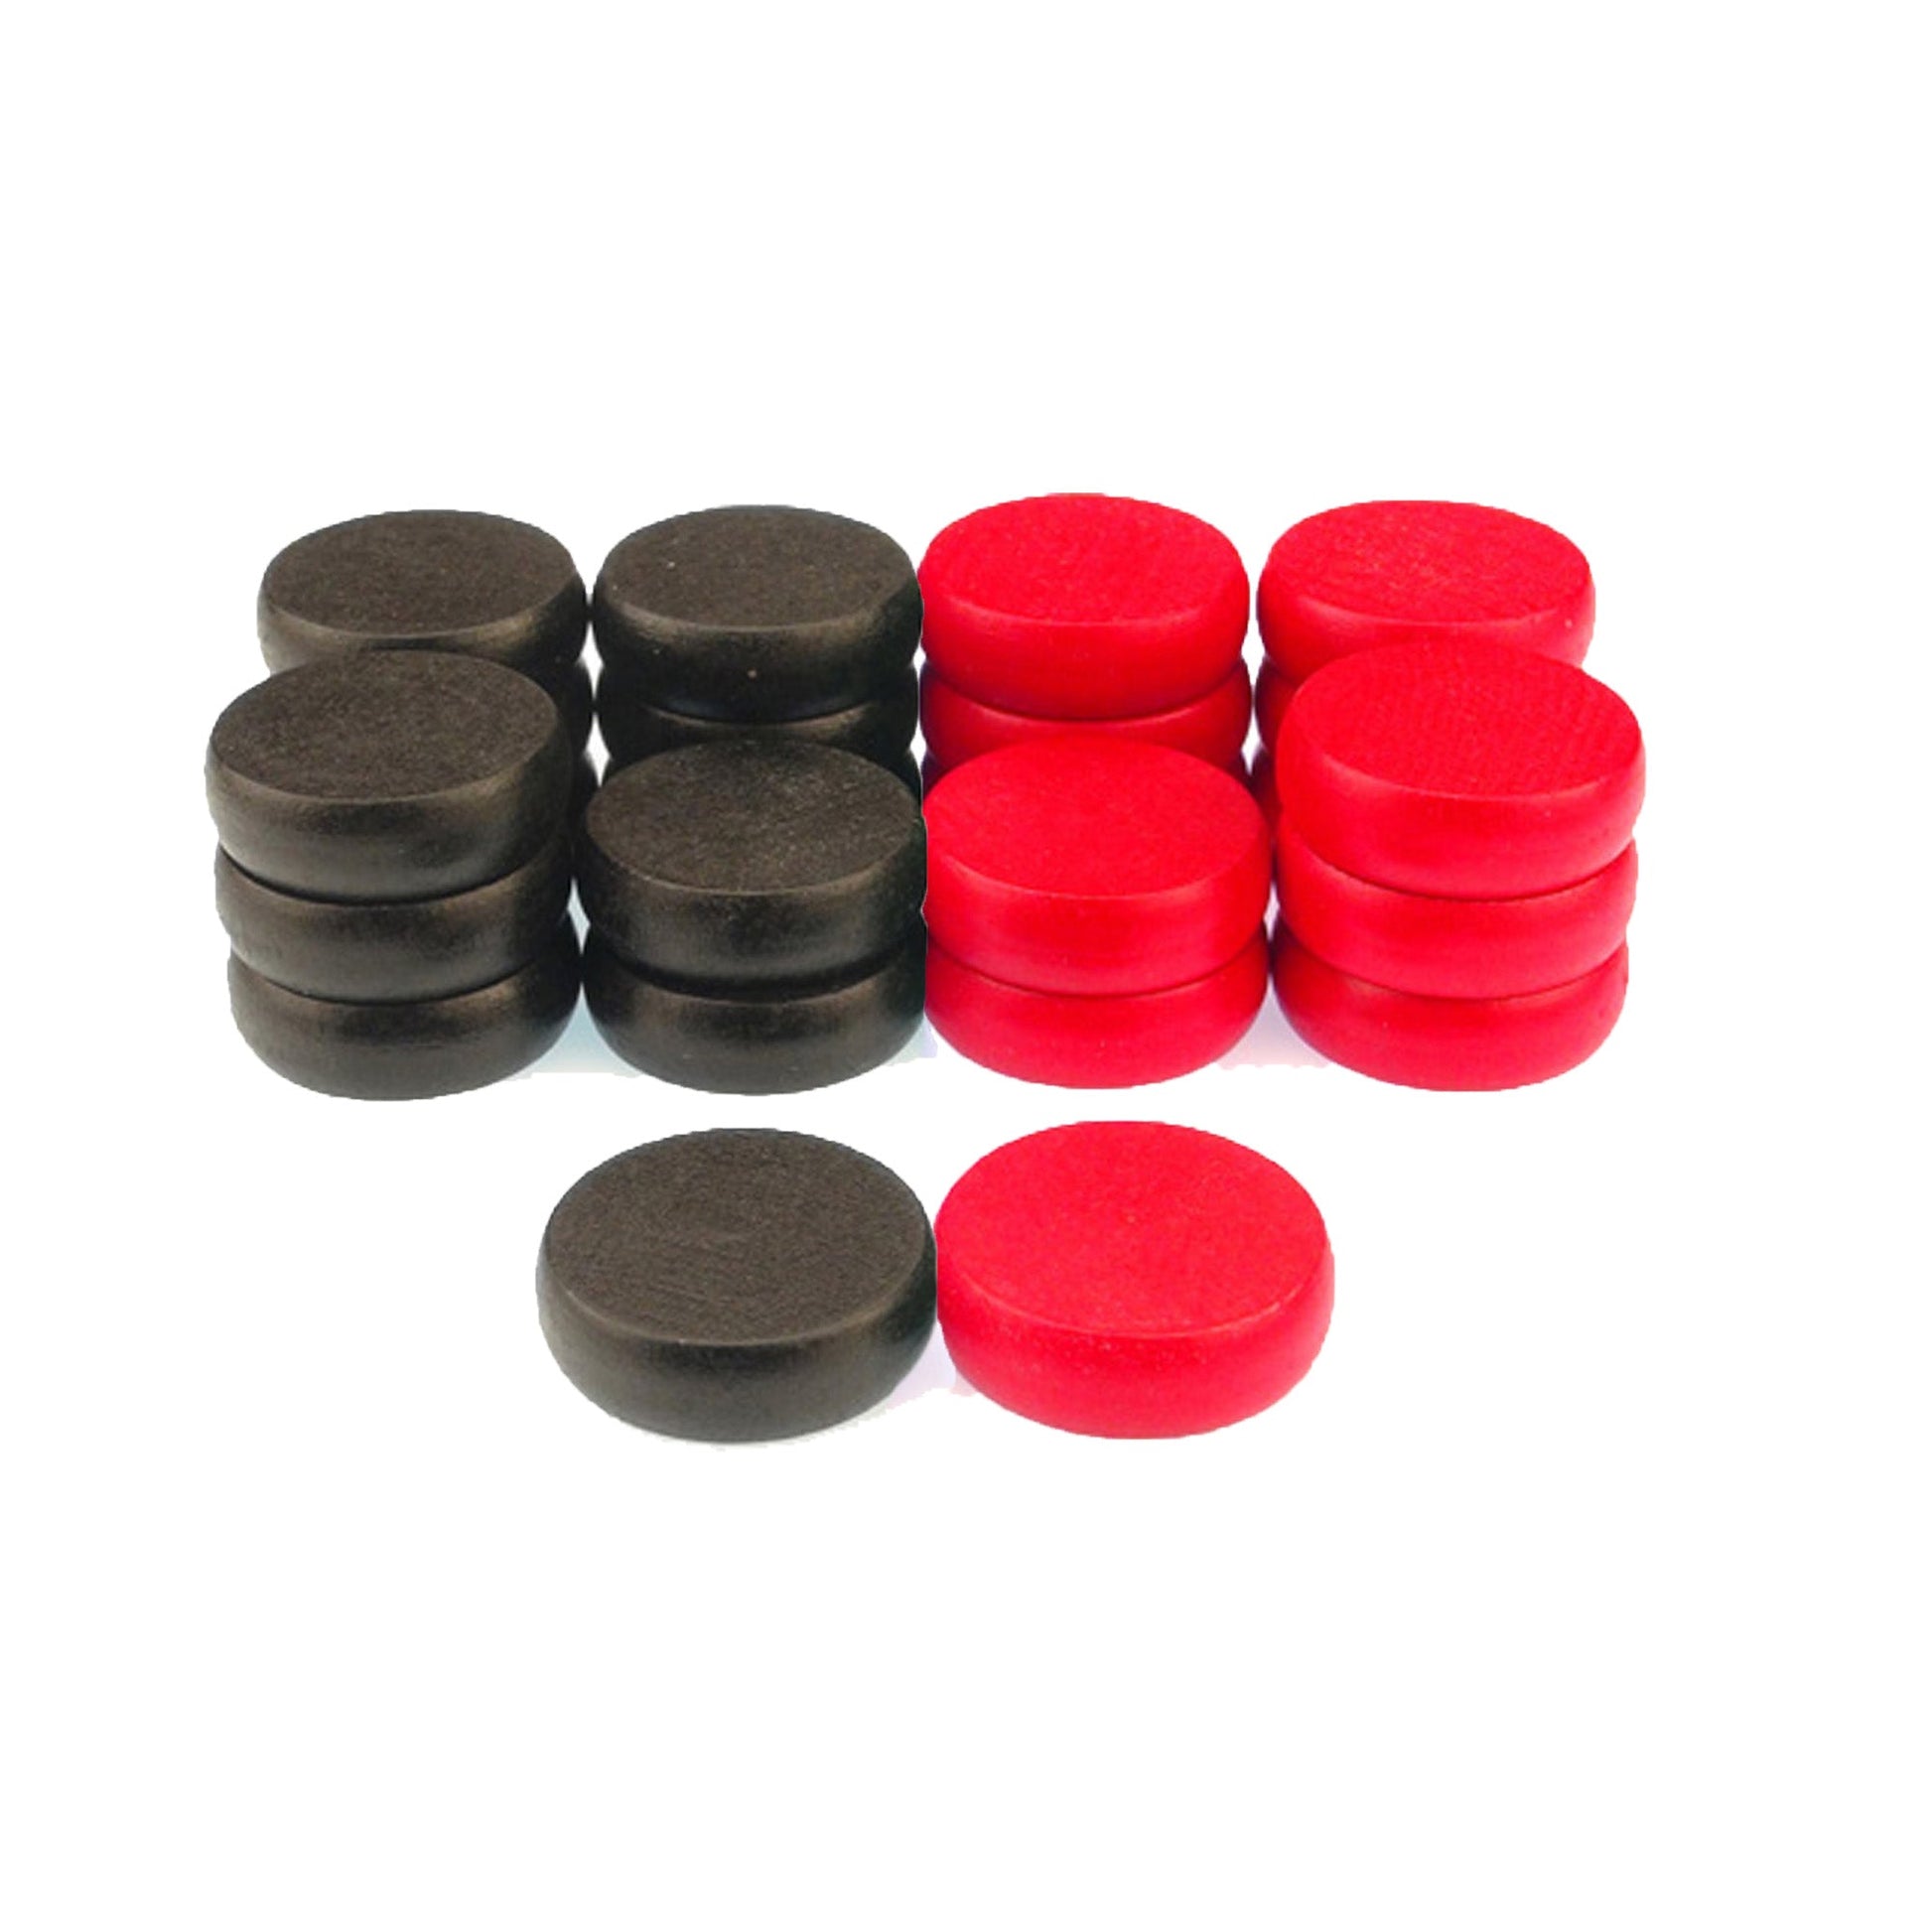 26 Black & Red Crokinole Tournament Discs + Bag (13 Black & 13 Red) - Crokinole Europe